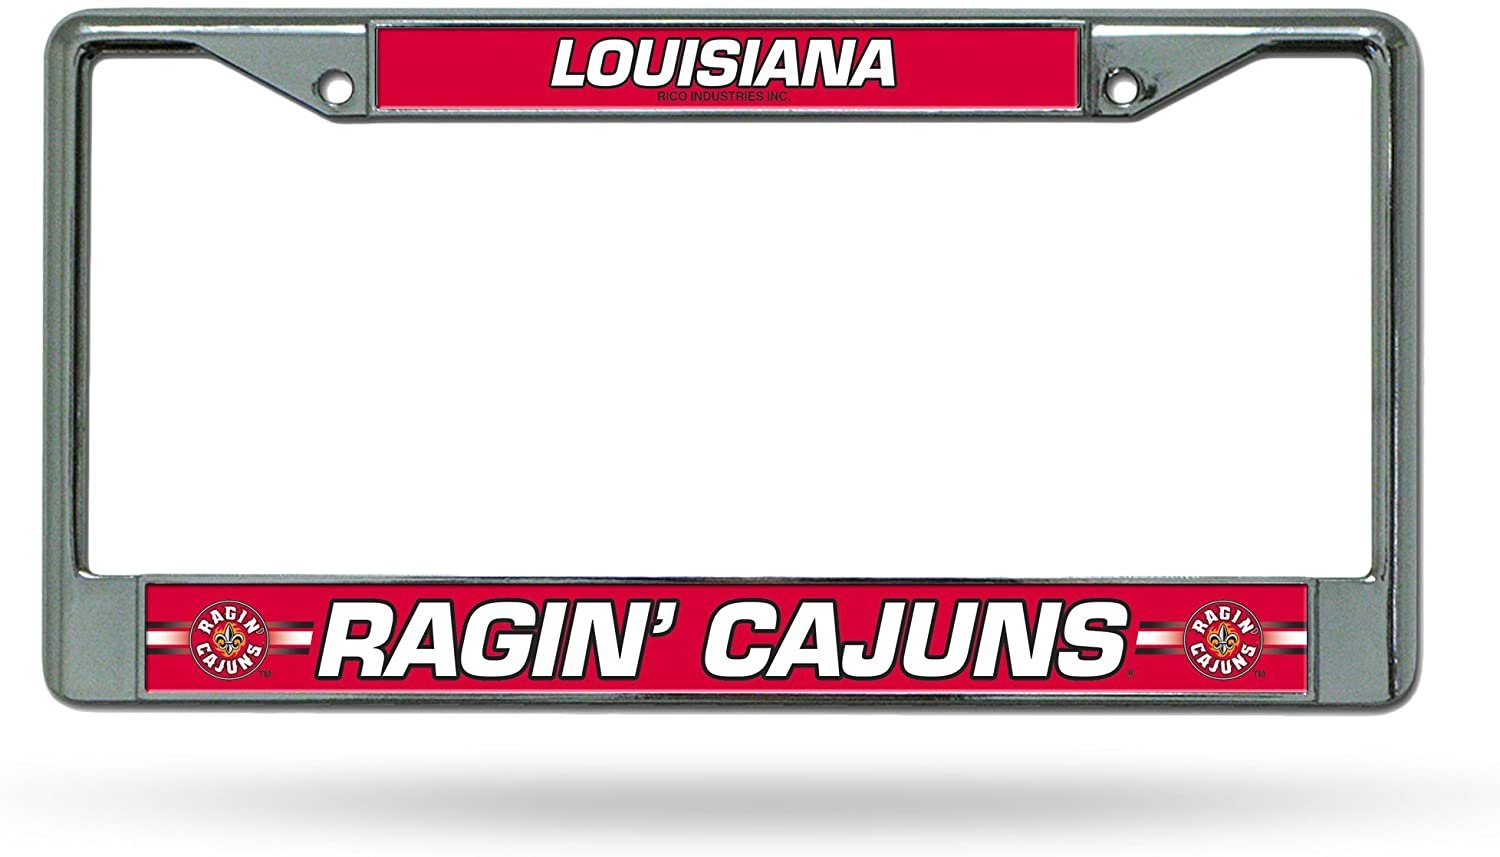 University of Louisiana Lafayette Ragin Cajuns Metal License Plate Frame Chrome Tag Cover, 12x6 Inch